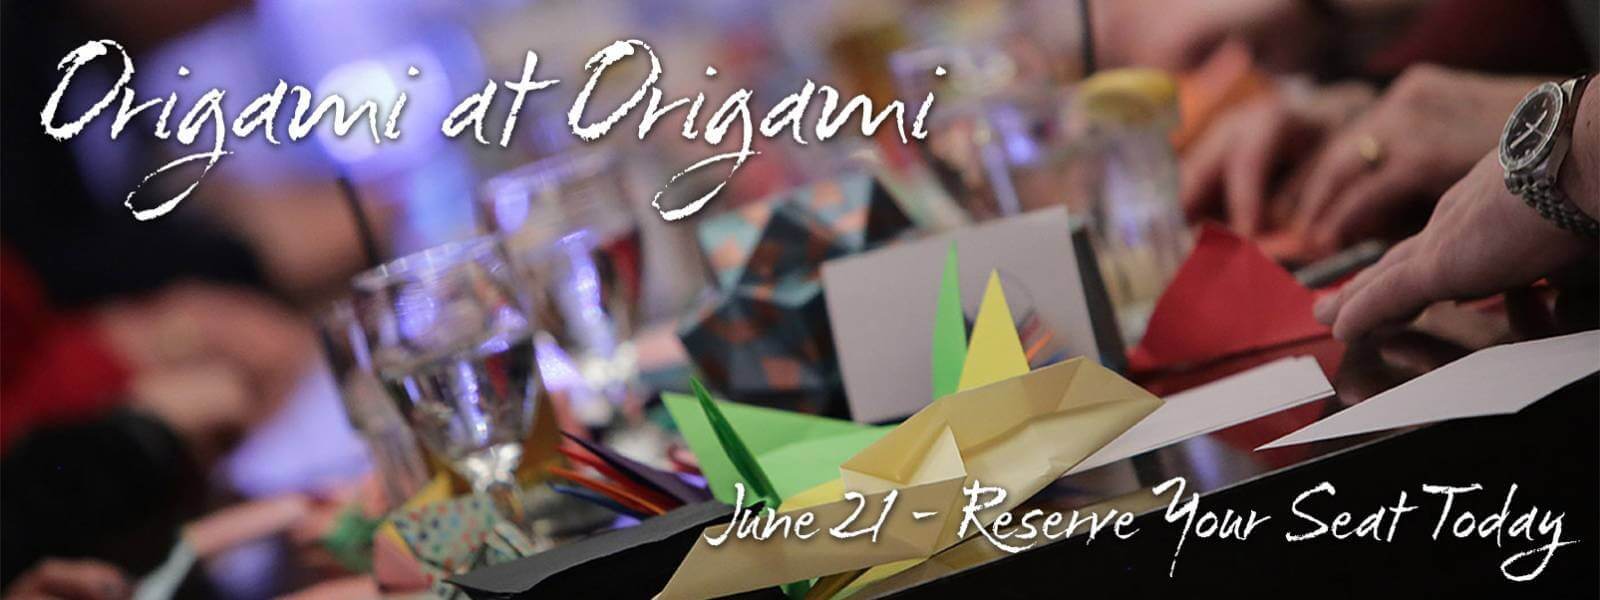 Origami at Origami June 21